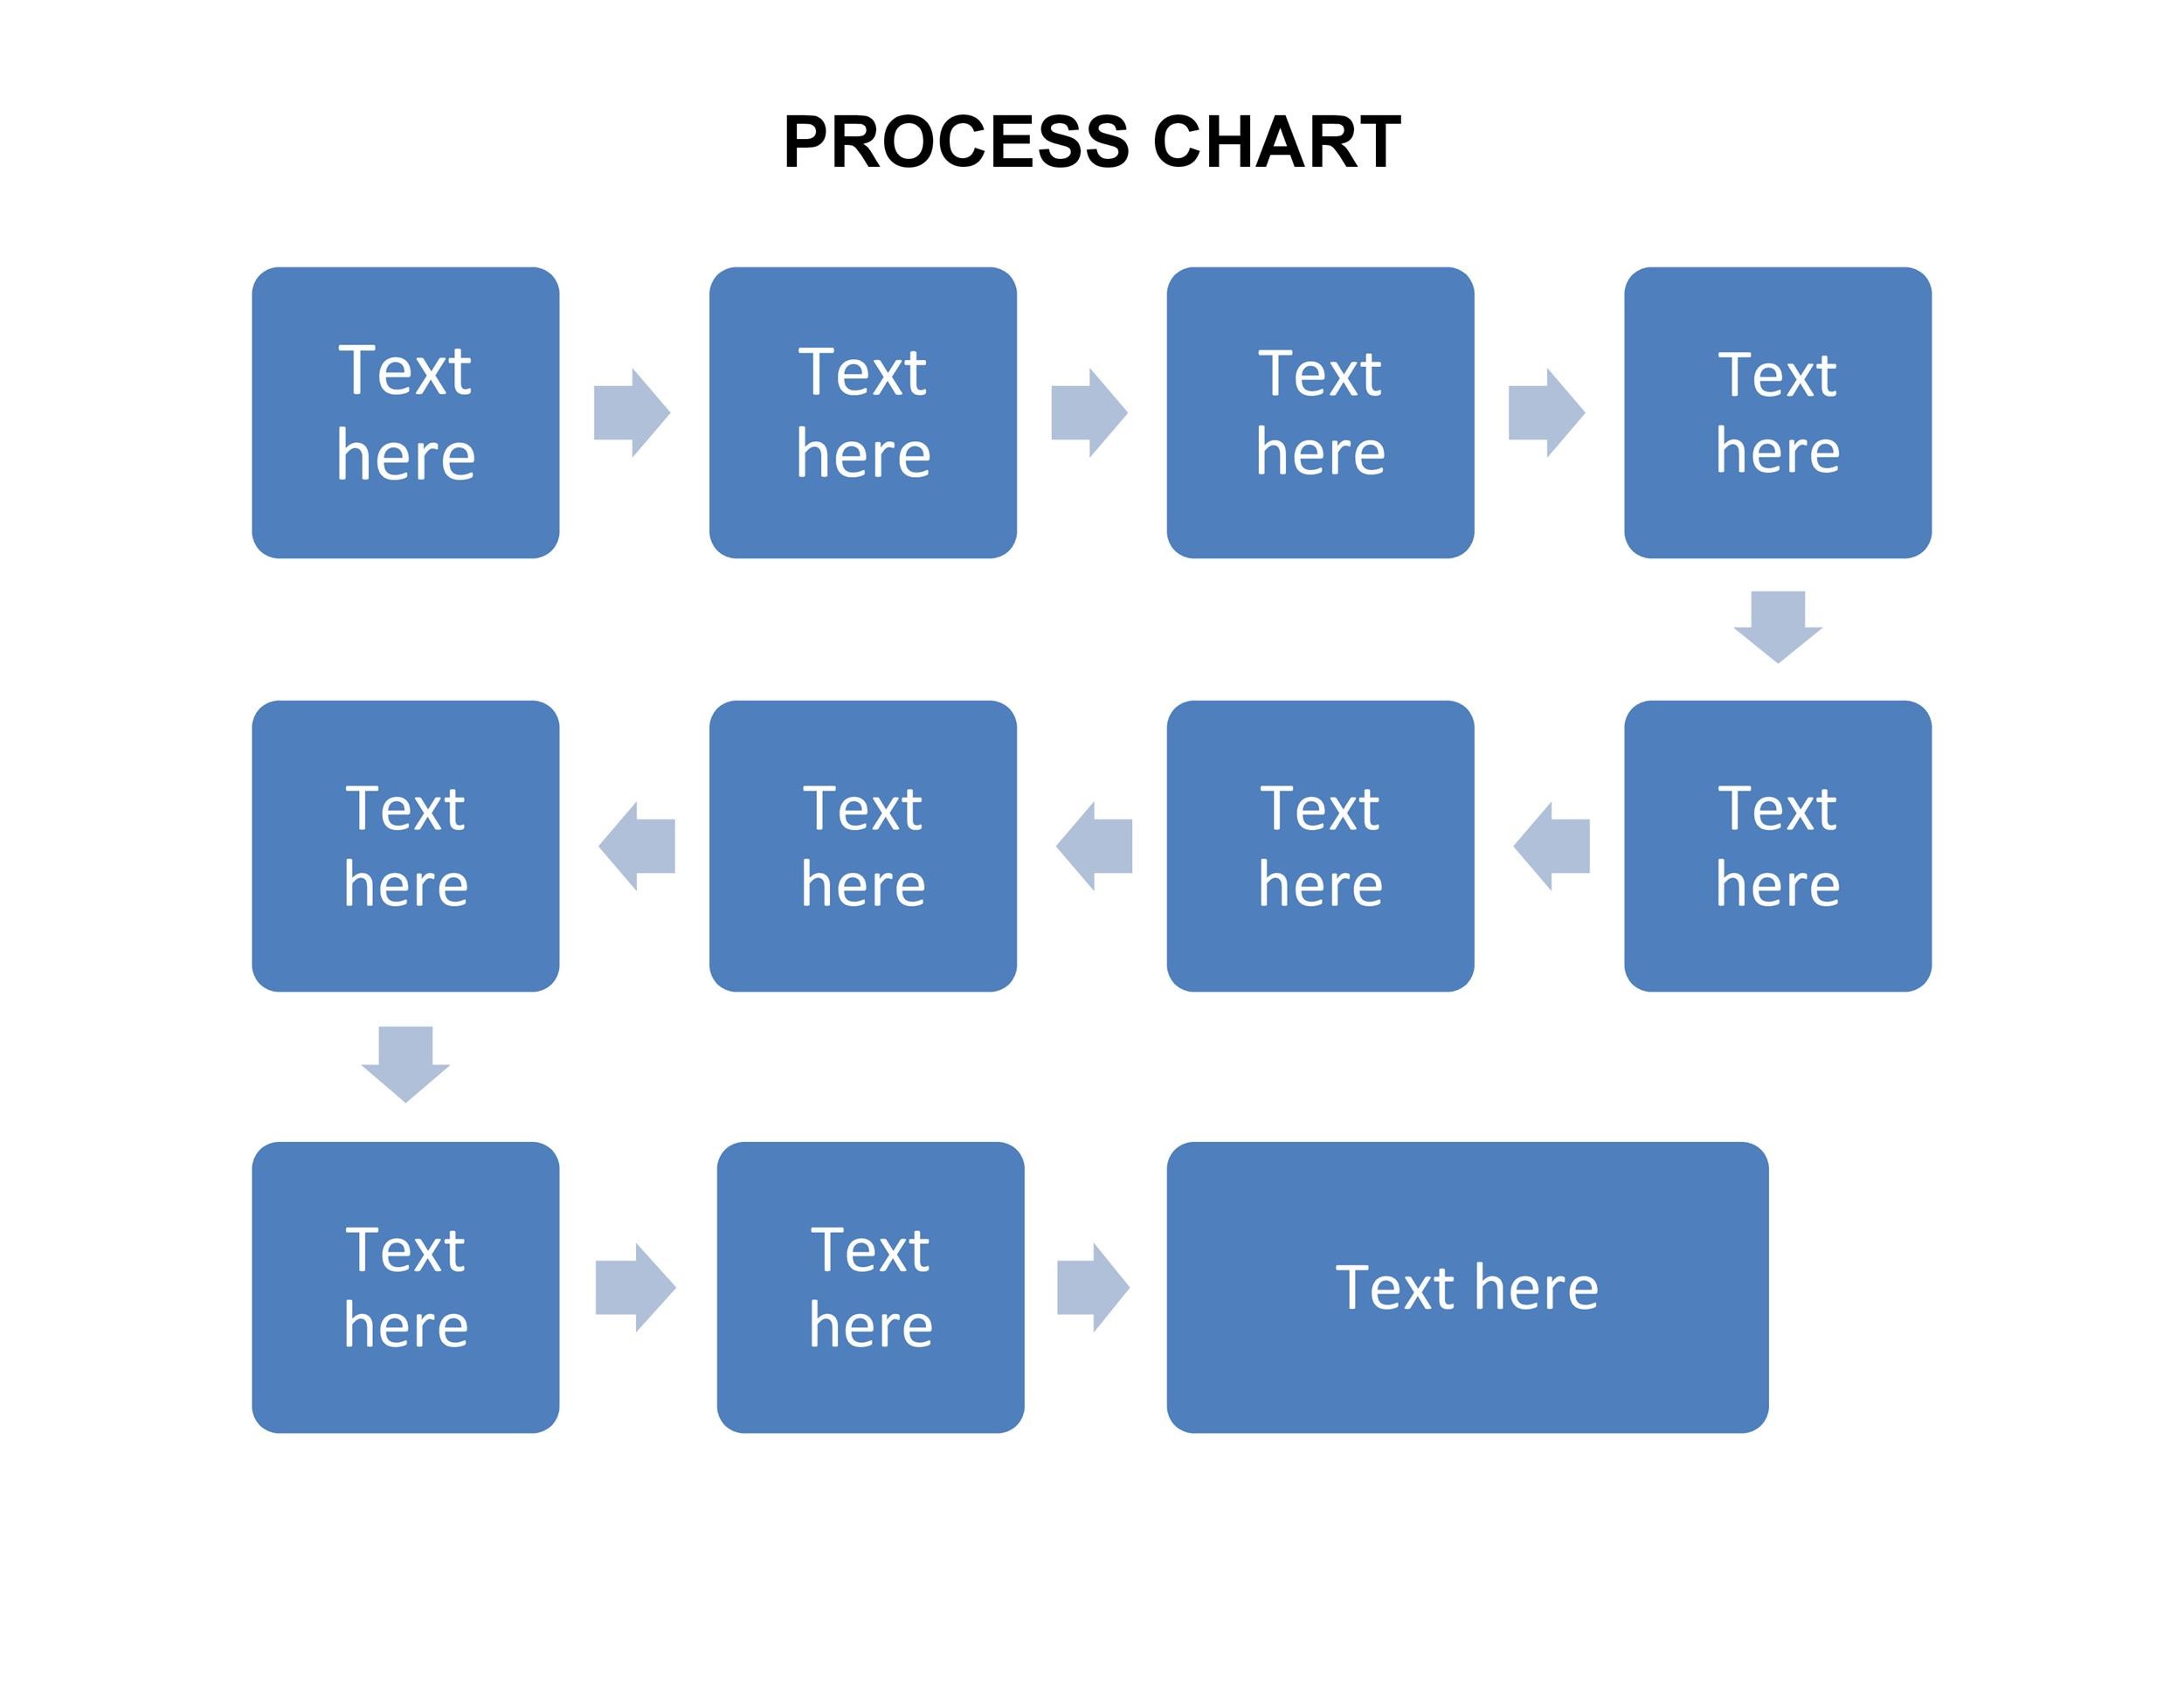 Printable Flow Chart Template